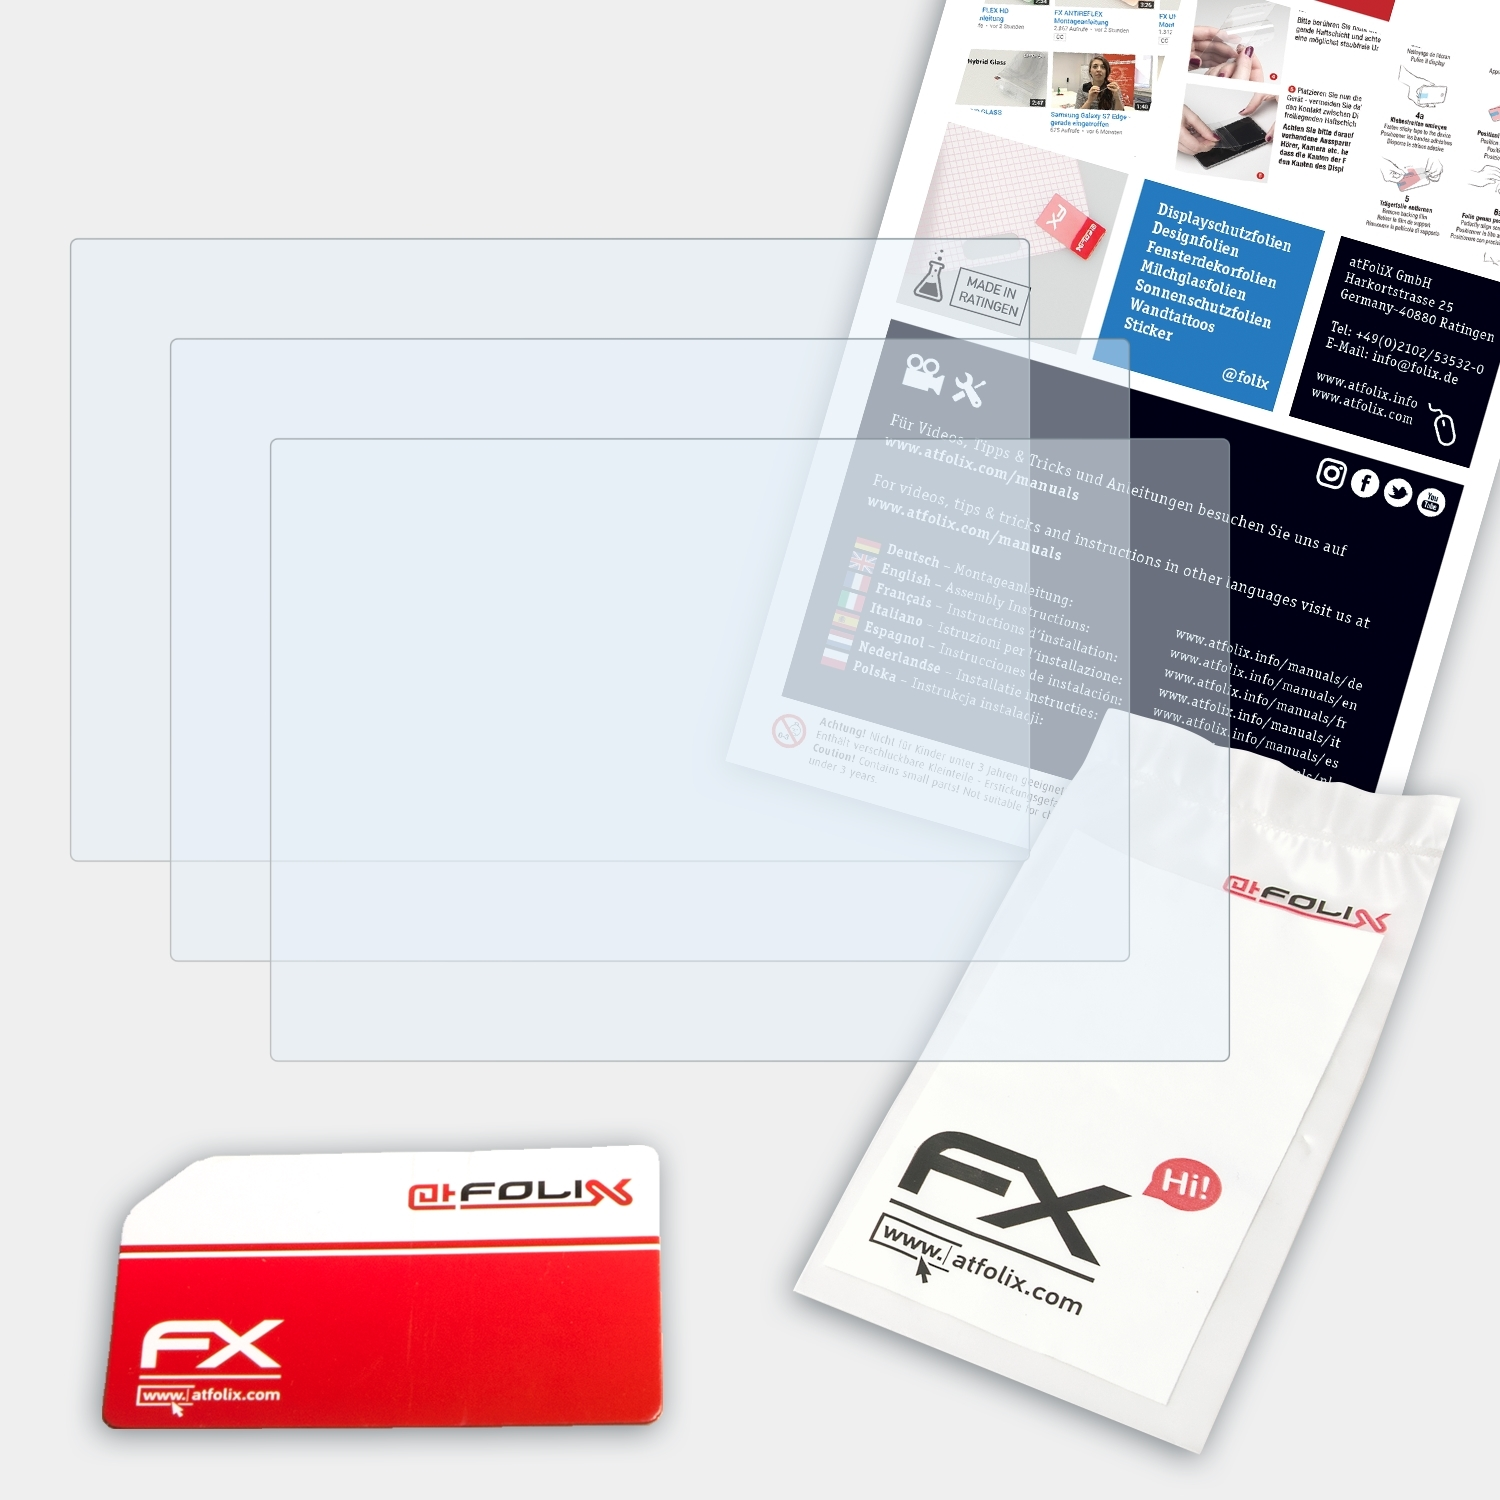 ATFOLIX 3x Fujifilm Displayschutz(für FX-Clear X-T1)